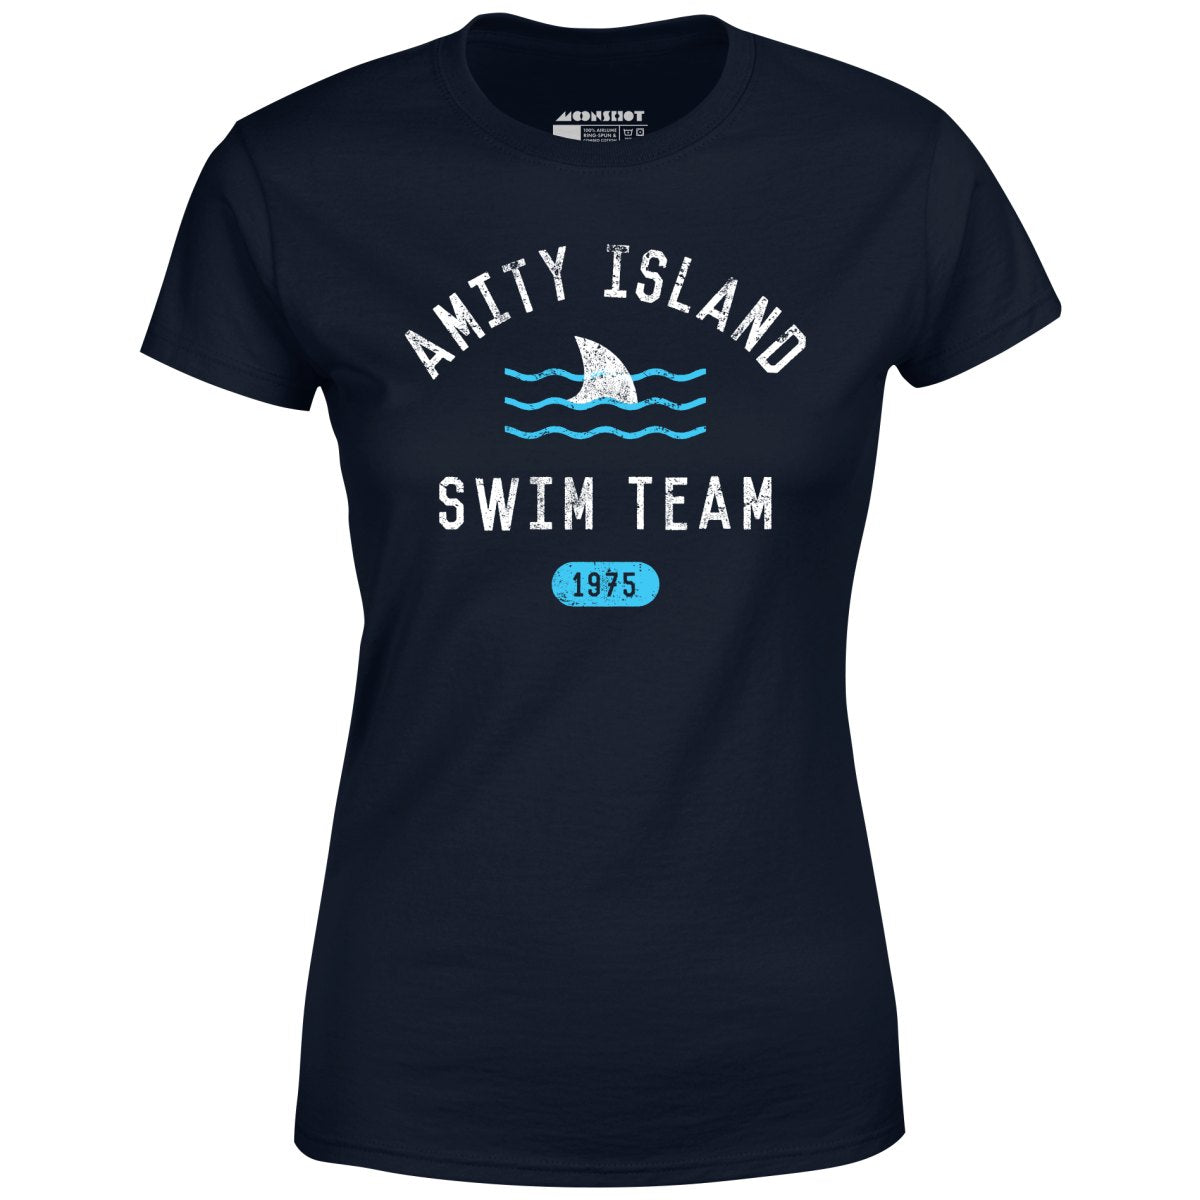 Amity Island Swim Team - Women's T-Shirt